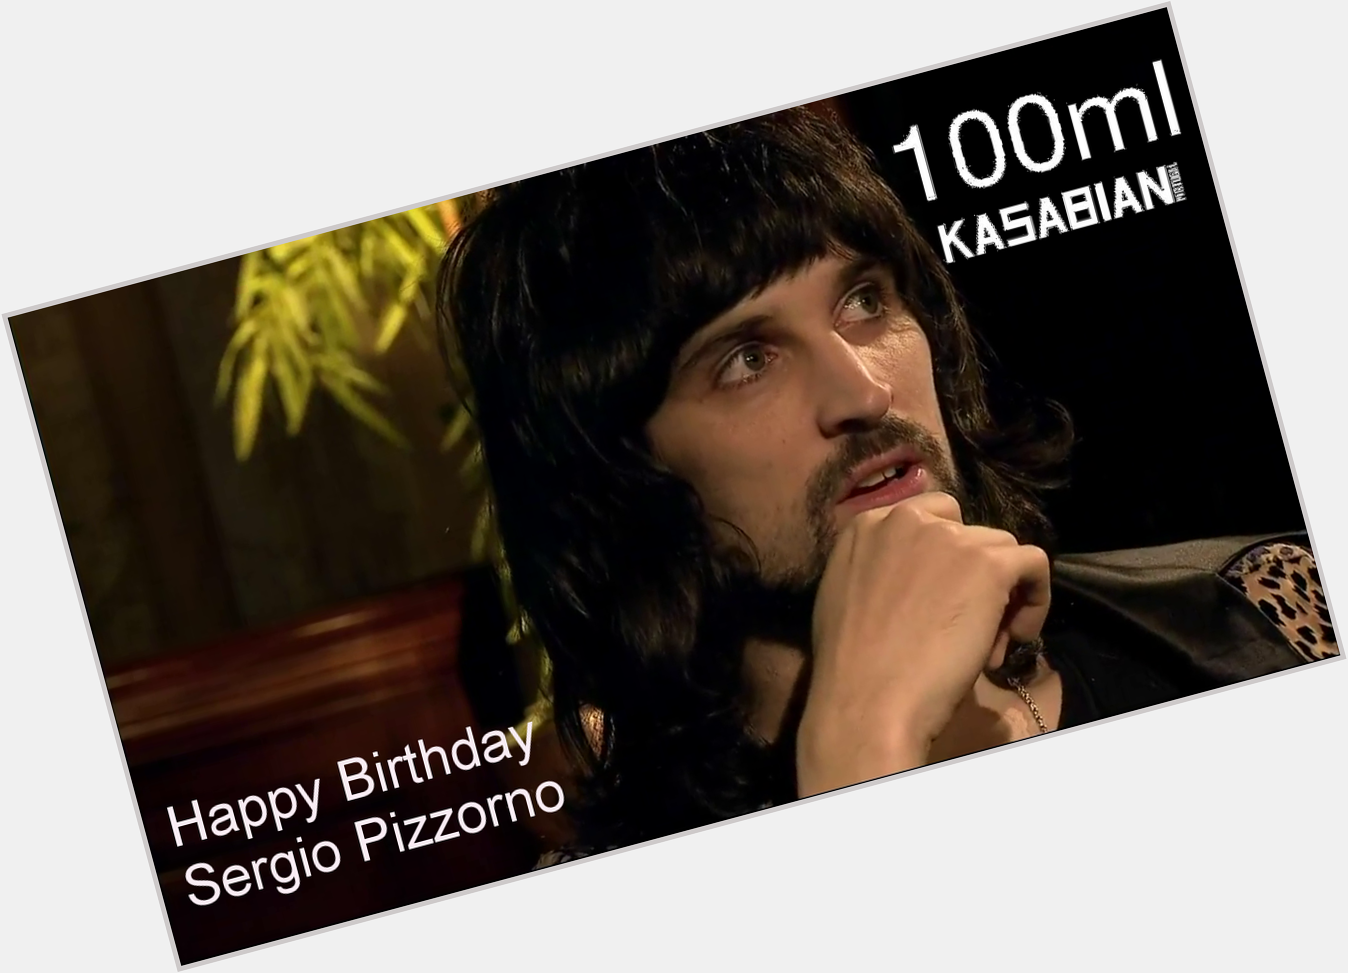 Kasabian Portugal wishes Sergio Pizzorno a happy birthday 